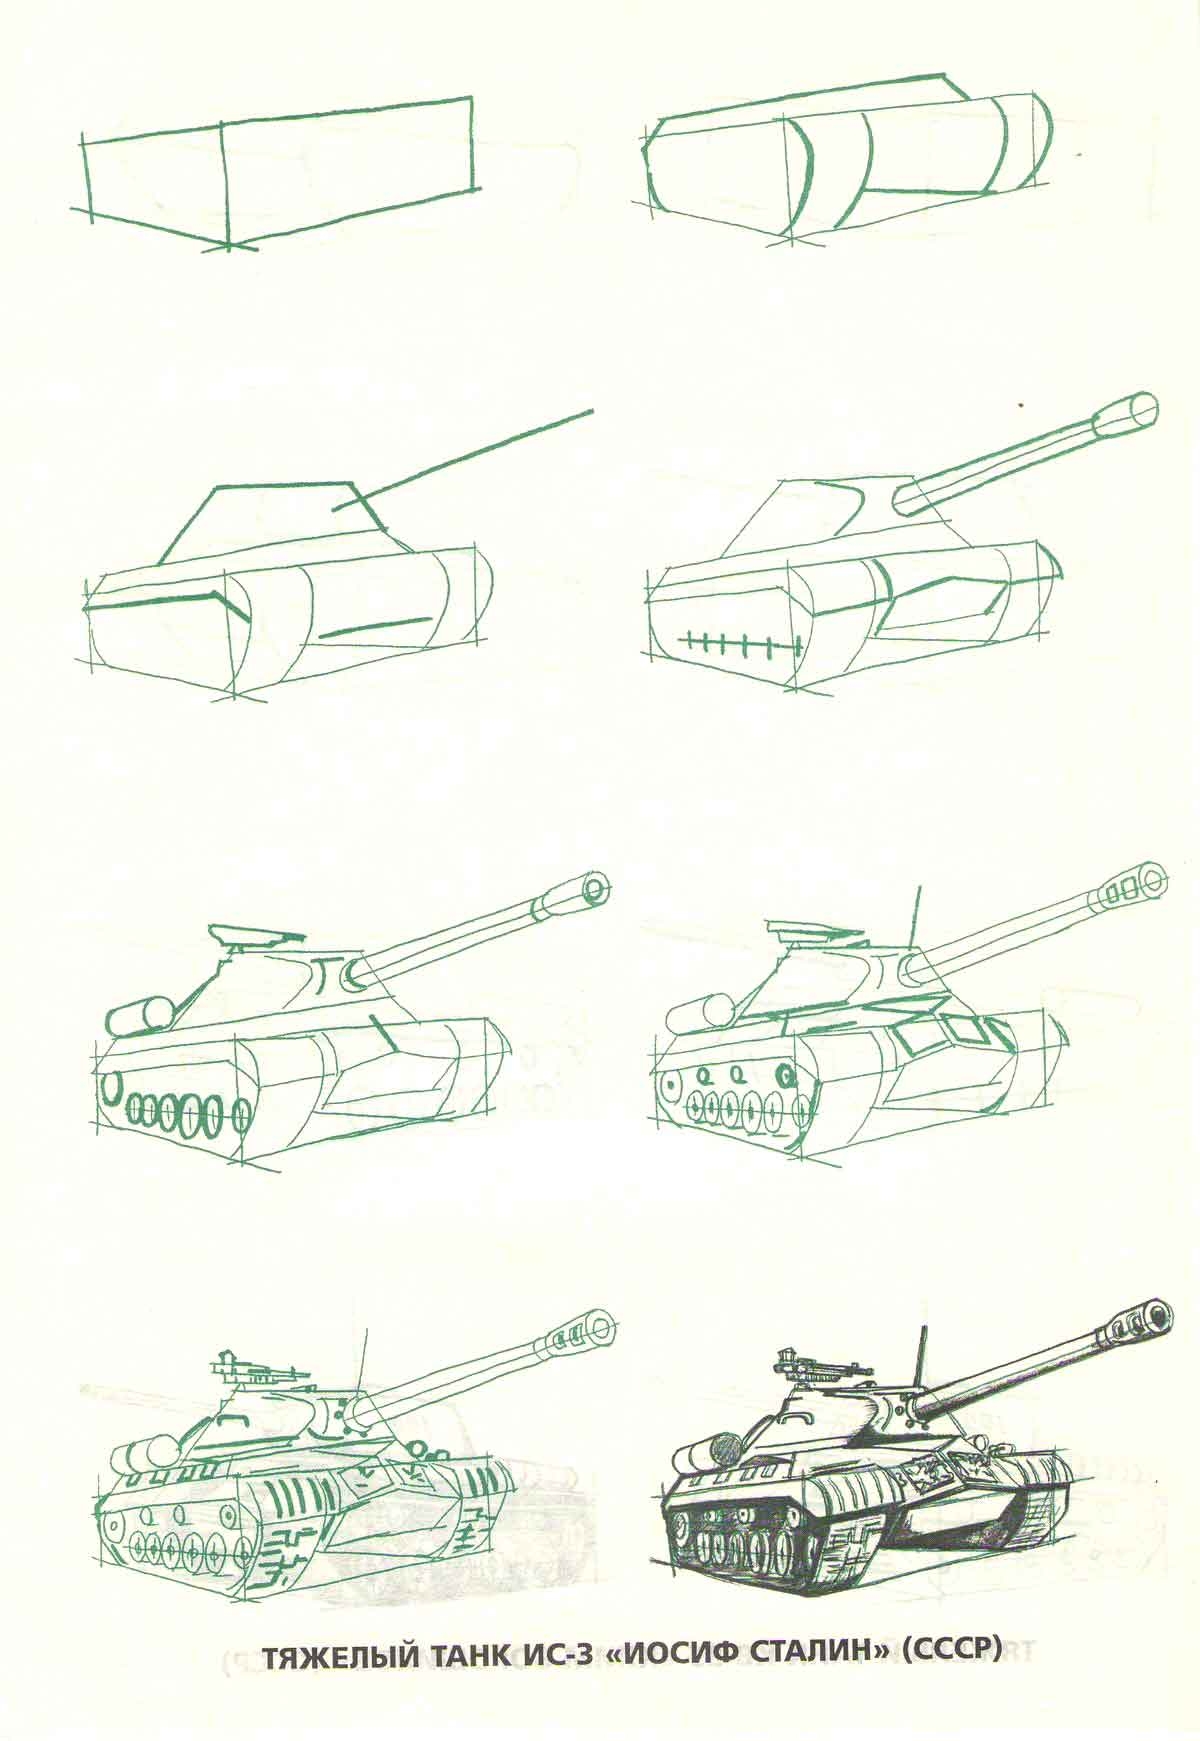 Нарисовать танк т-34 поэтапно